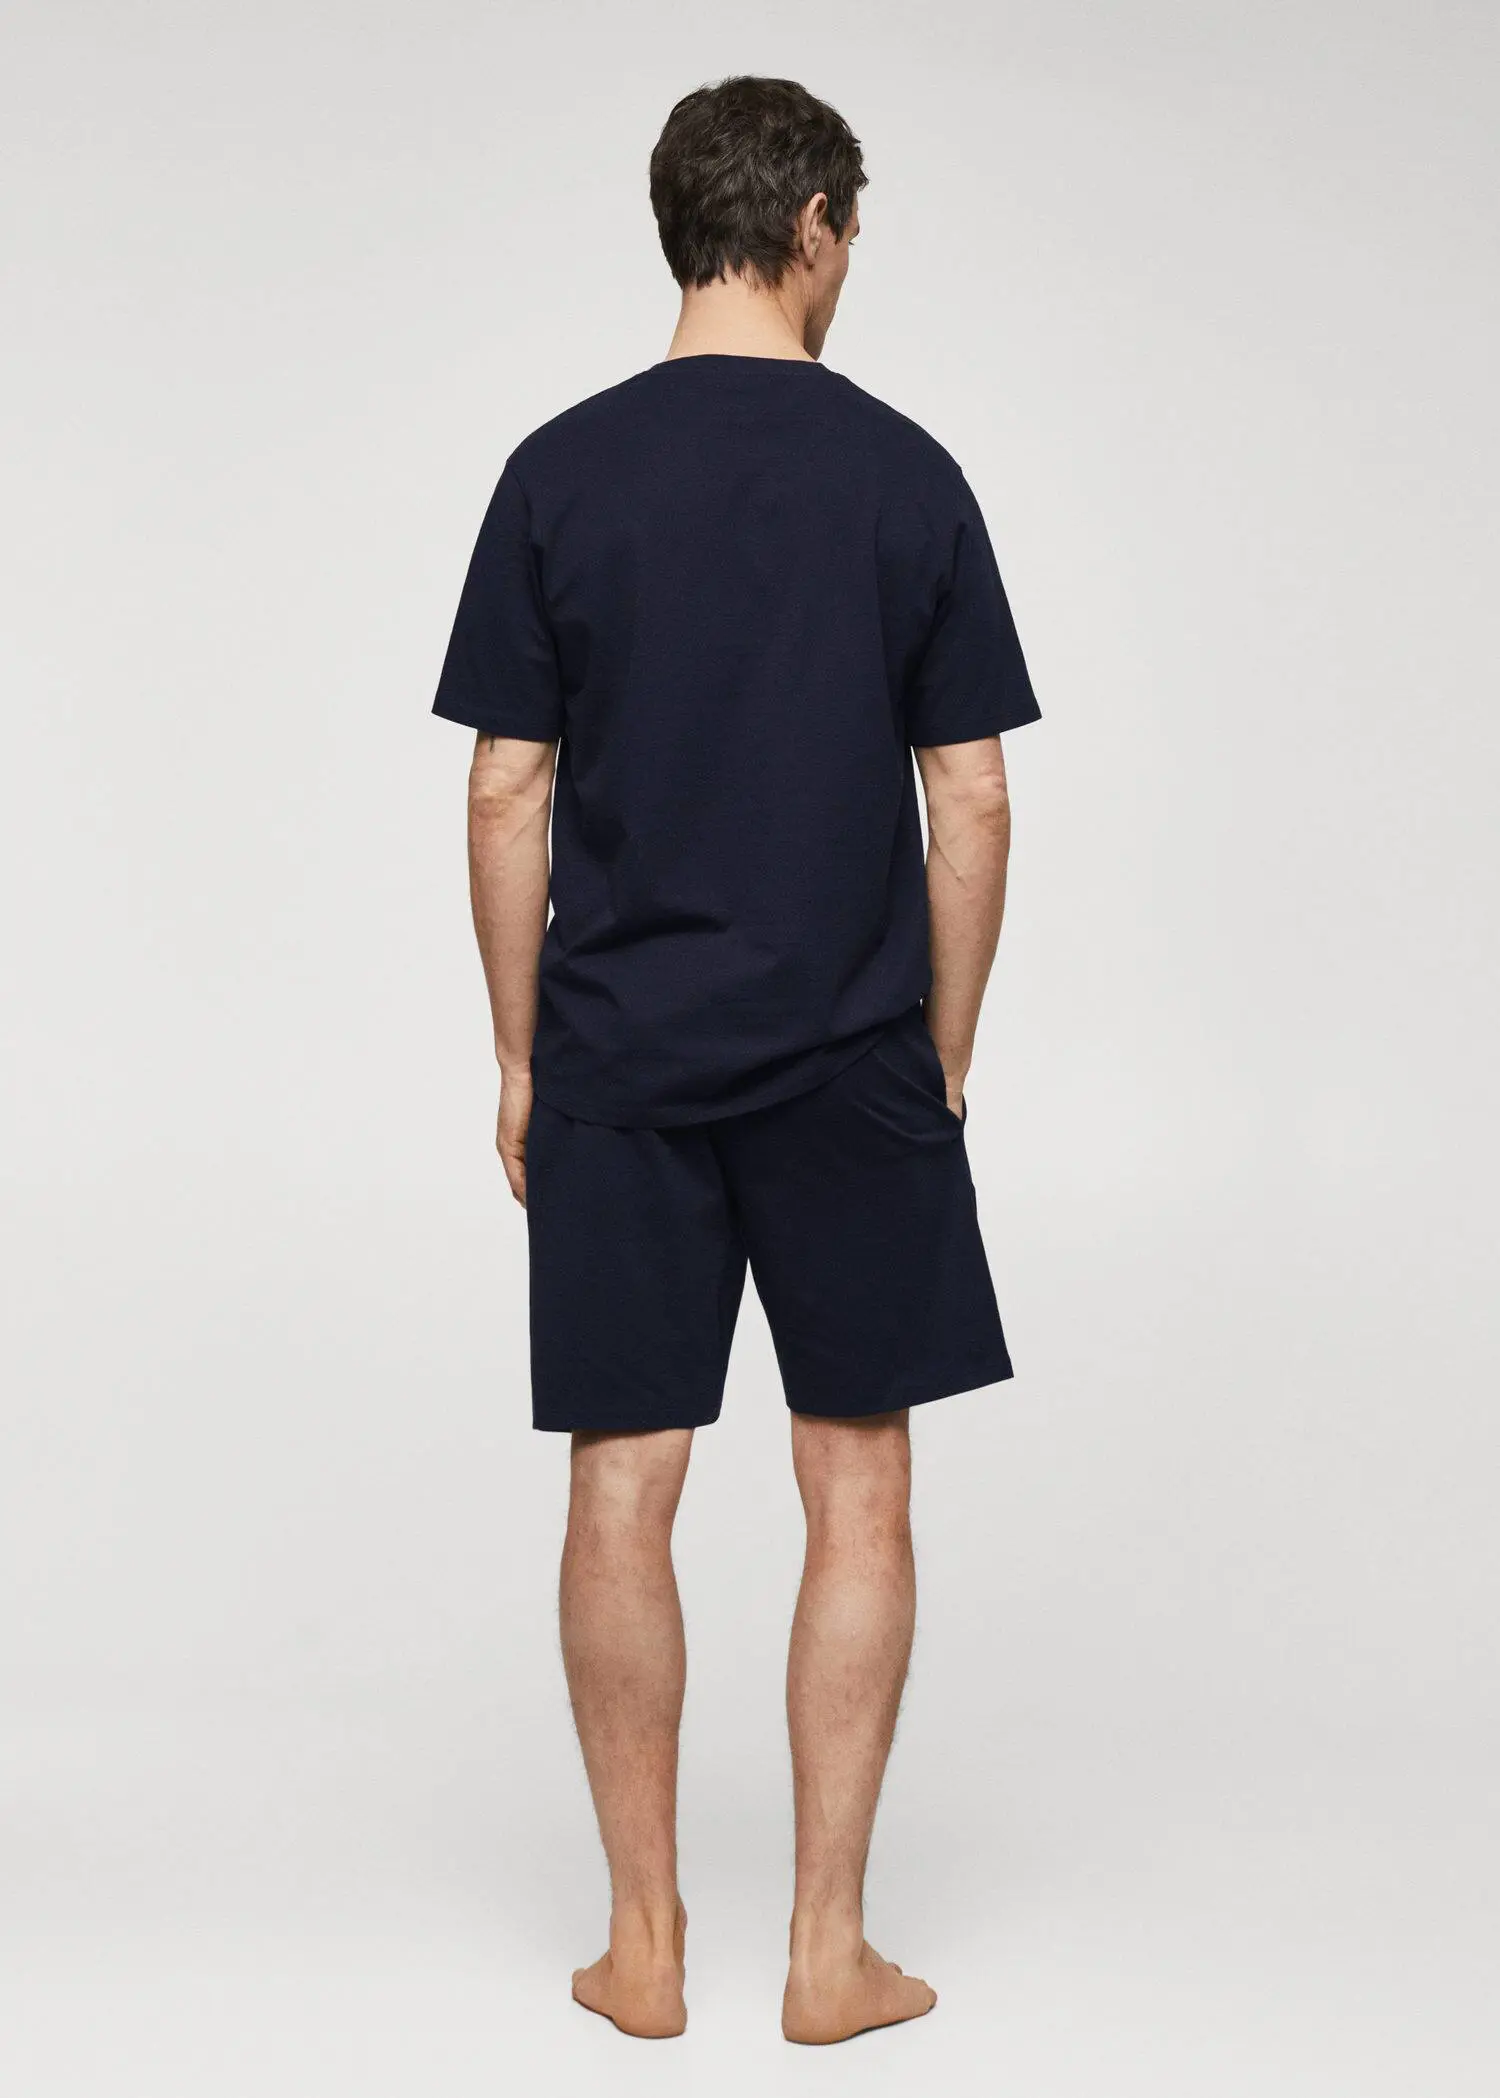 Mango Cotton pyjama shorts pack. a man wearing a black shirt and shorts. 